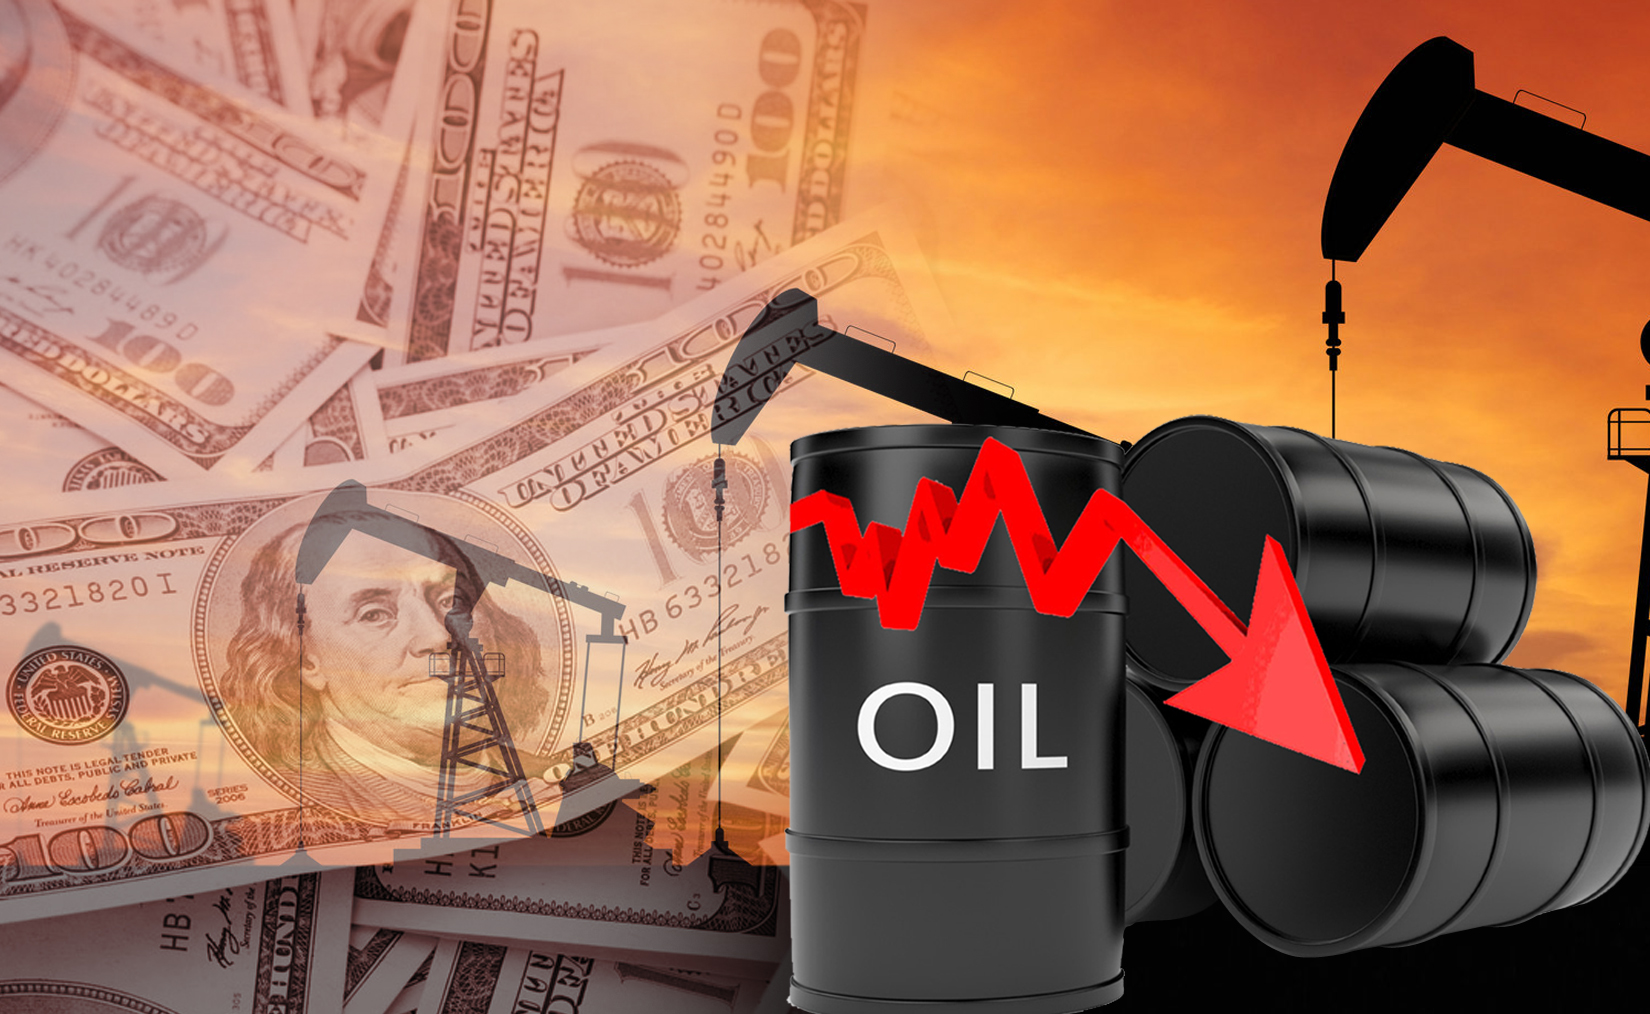 Kuwait oil price down 88 cents to USD 48.80 pb